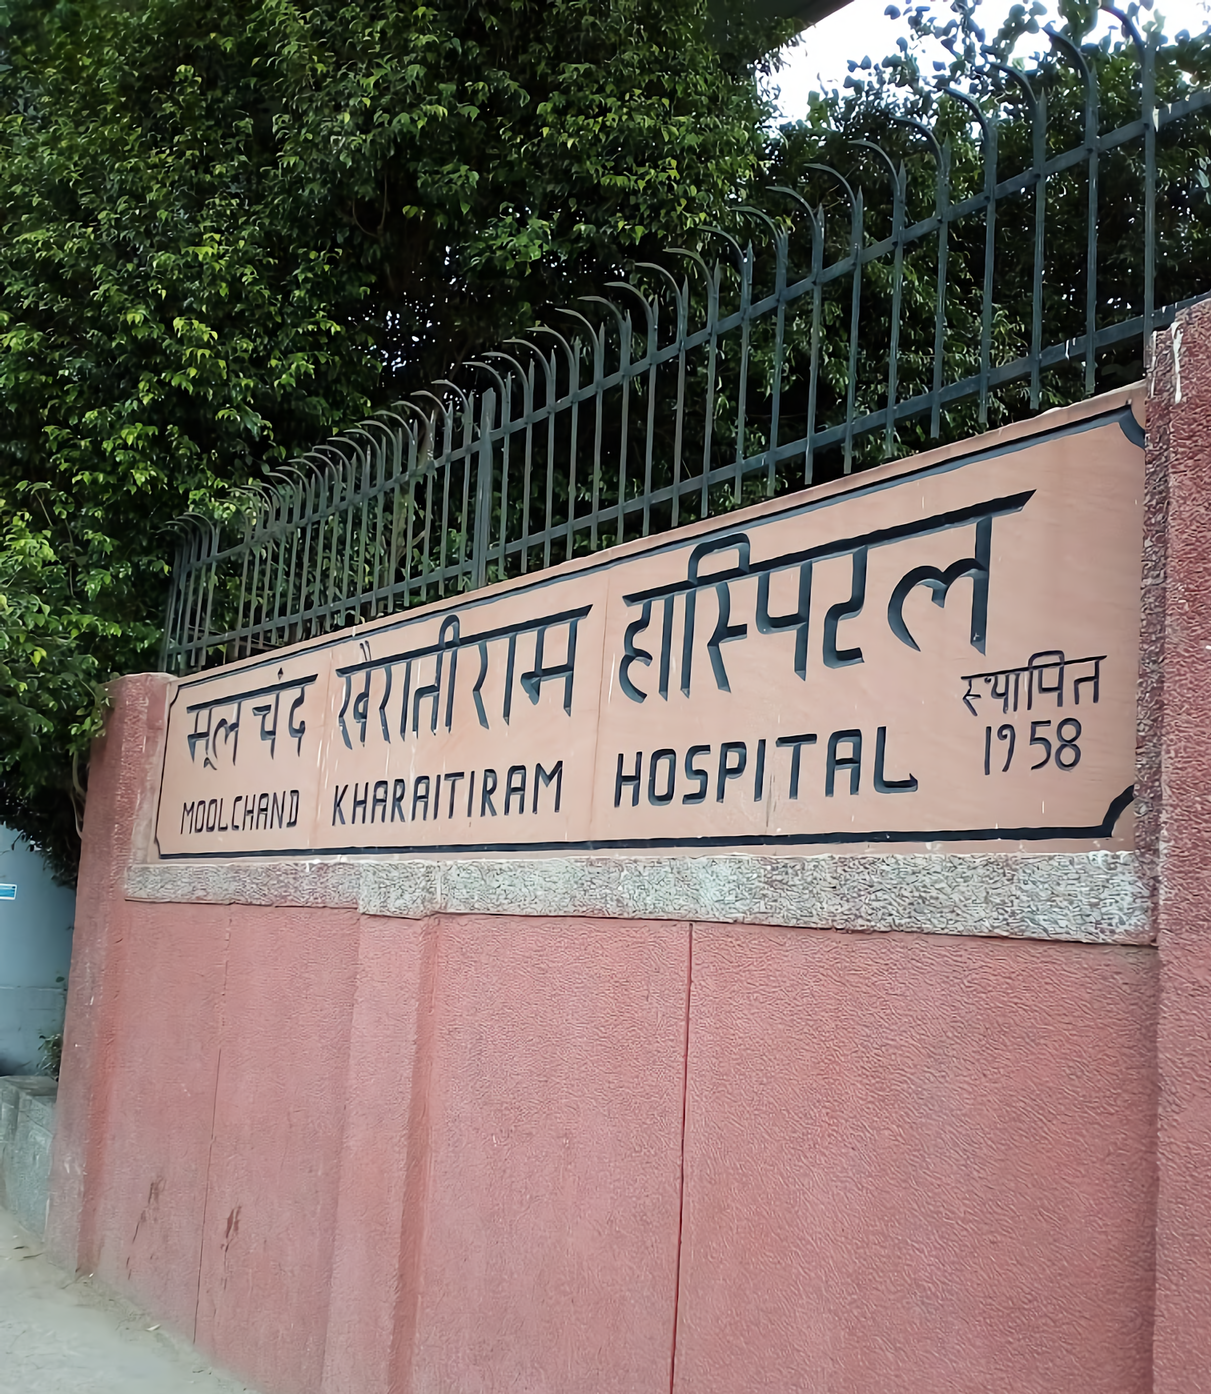 Moolchand Kharaiti Ram Hospital